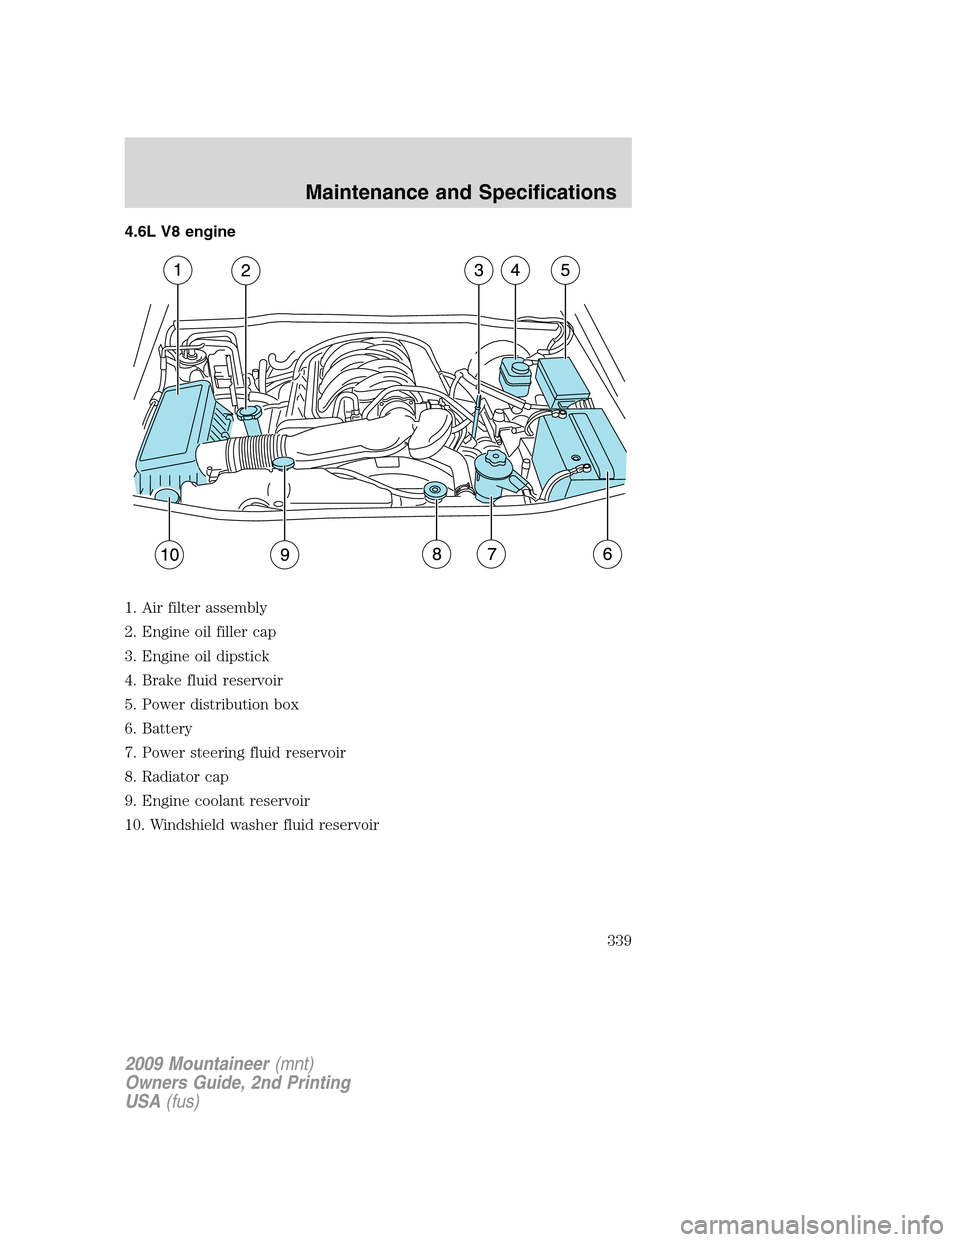 Mercury Mountaineer 2009  Owners Manuals 4.6L V8 engine
1. Air filter assembly
2. Engine oil filler cap
3. Engine oil dipstick
4. Brake fluid reservoir
5. Power distribution box
6. Battery
7. Power steering fluid reservoir
8. Radiator cap
9.